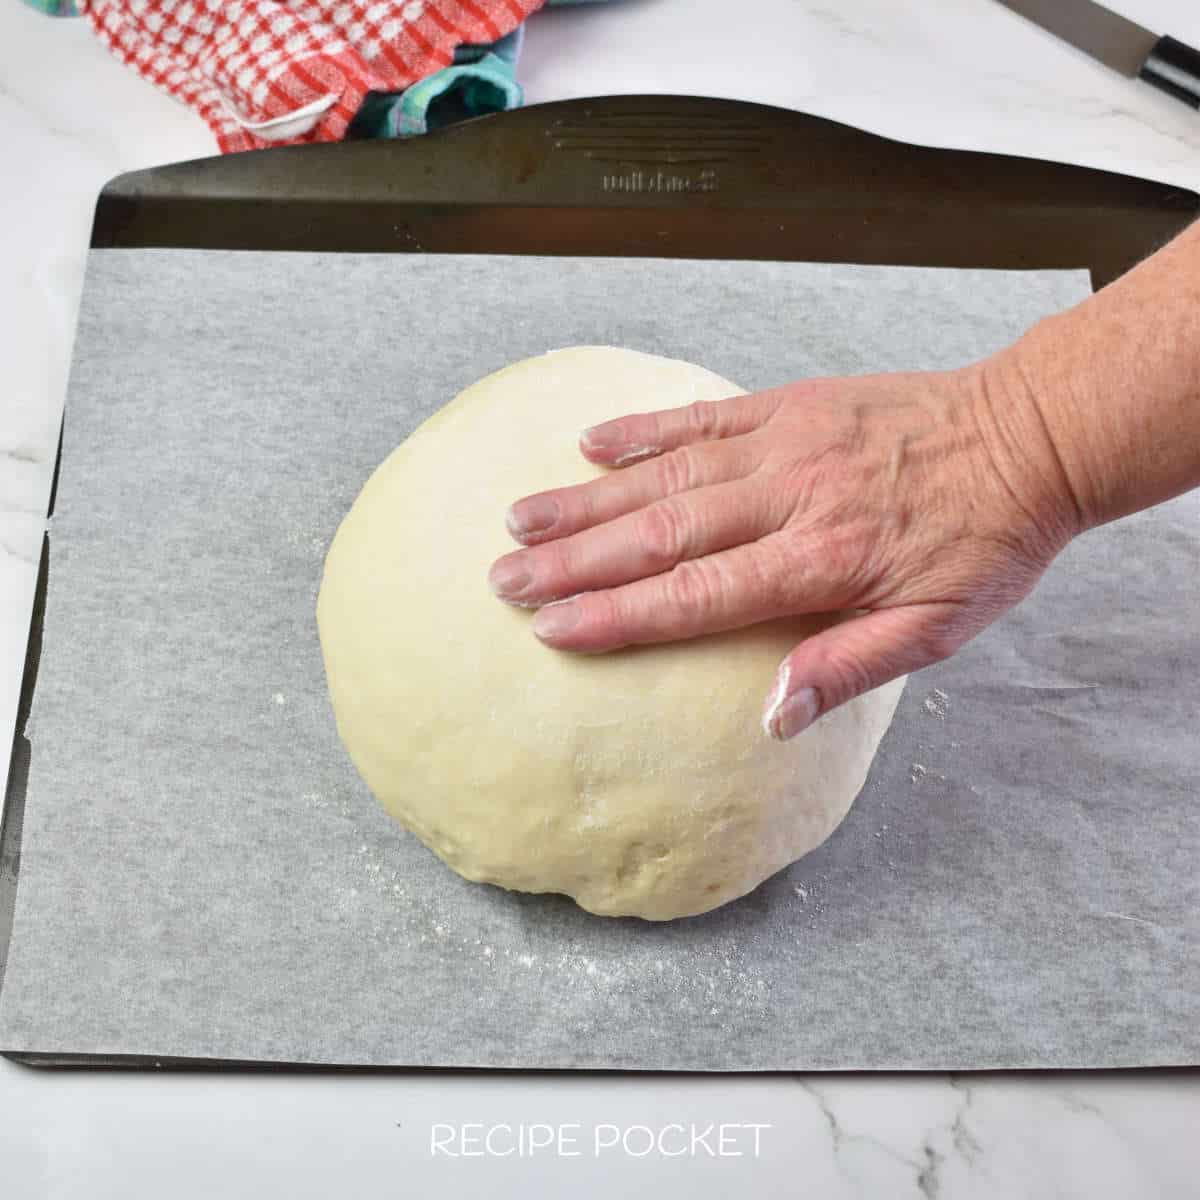 bread dough on a baking tray.